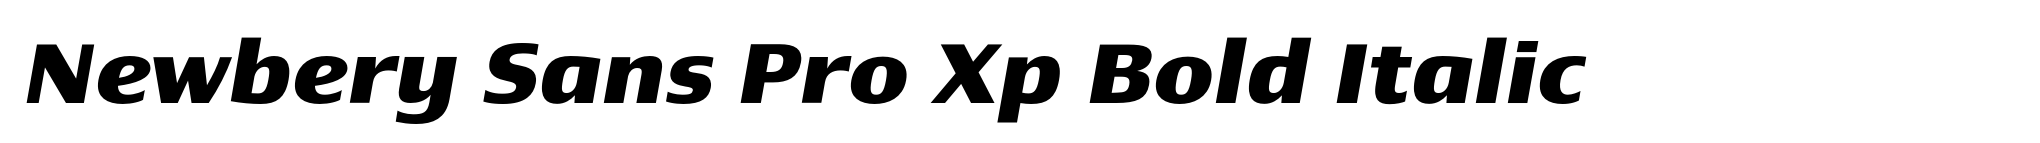 Newbery Sans Pro Xp Bold Italic image